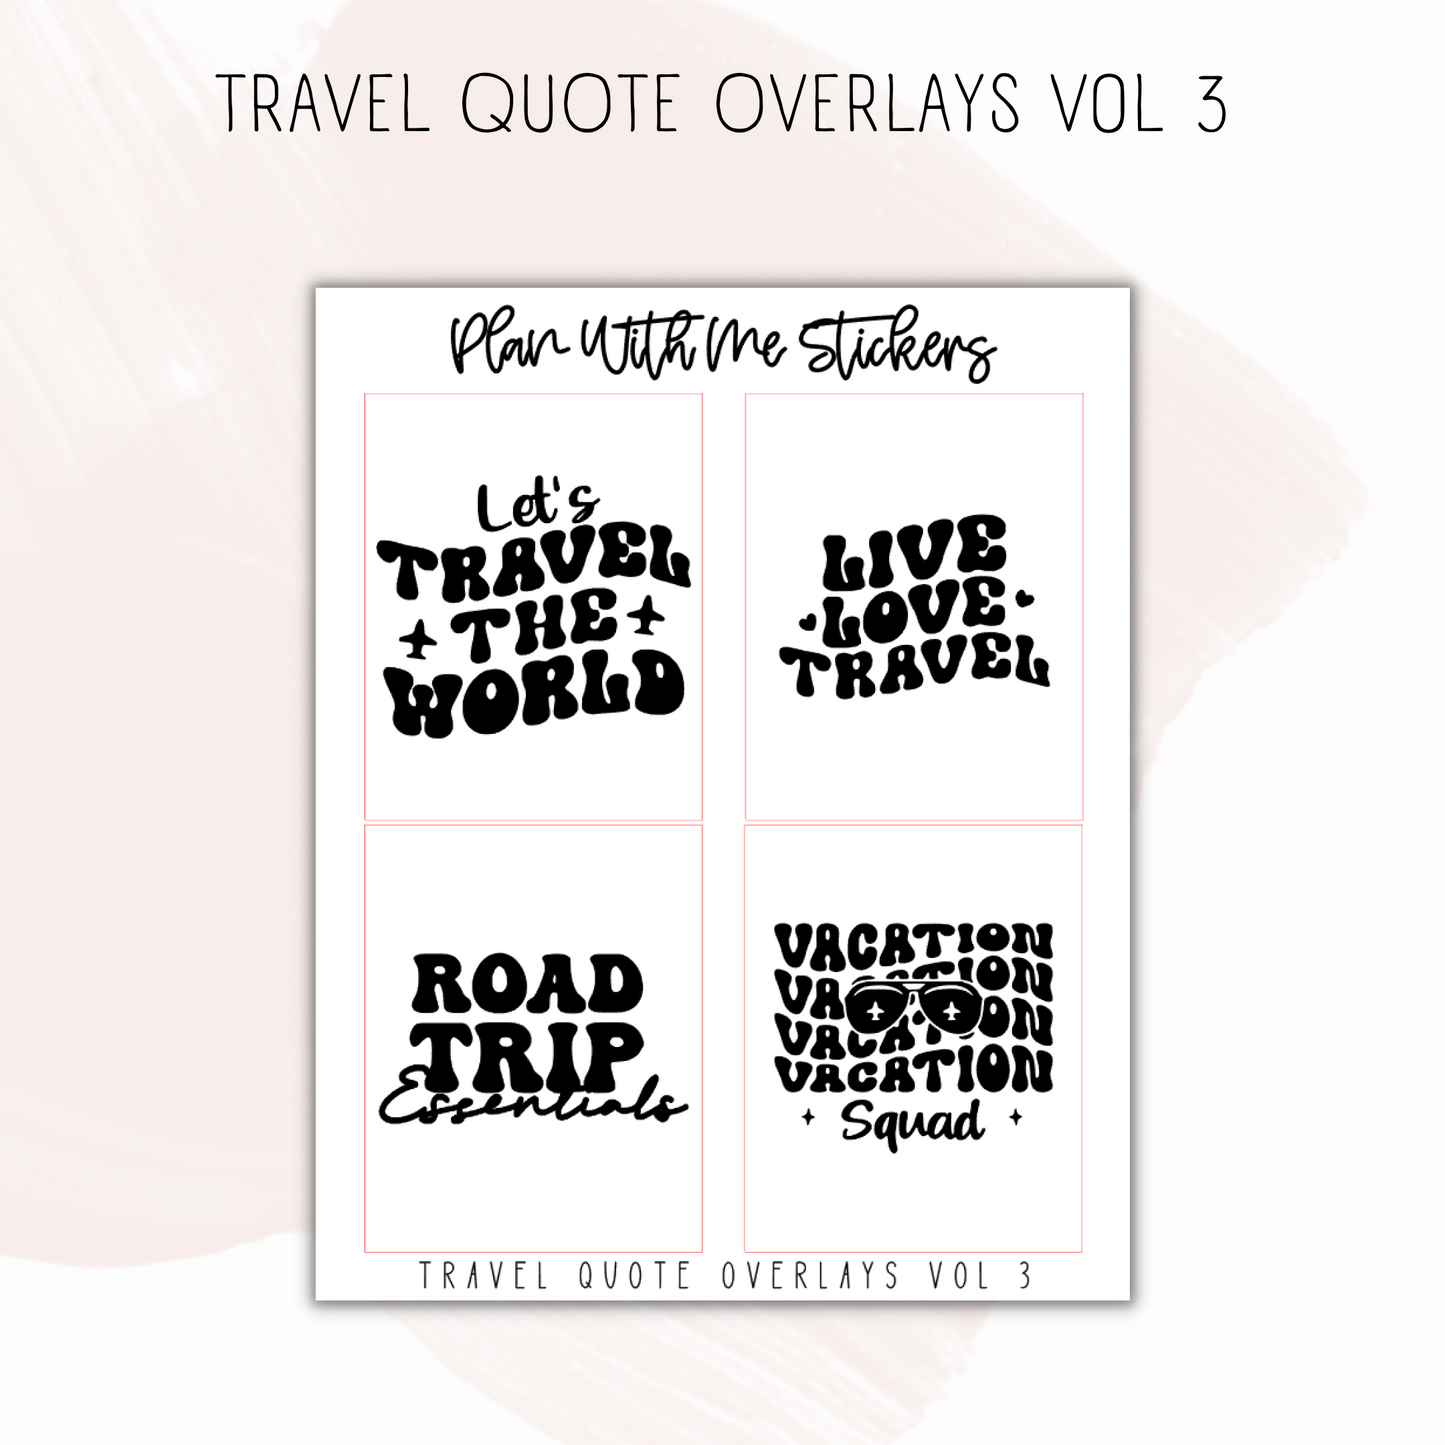 Travel Overlays Vol 3